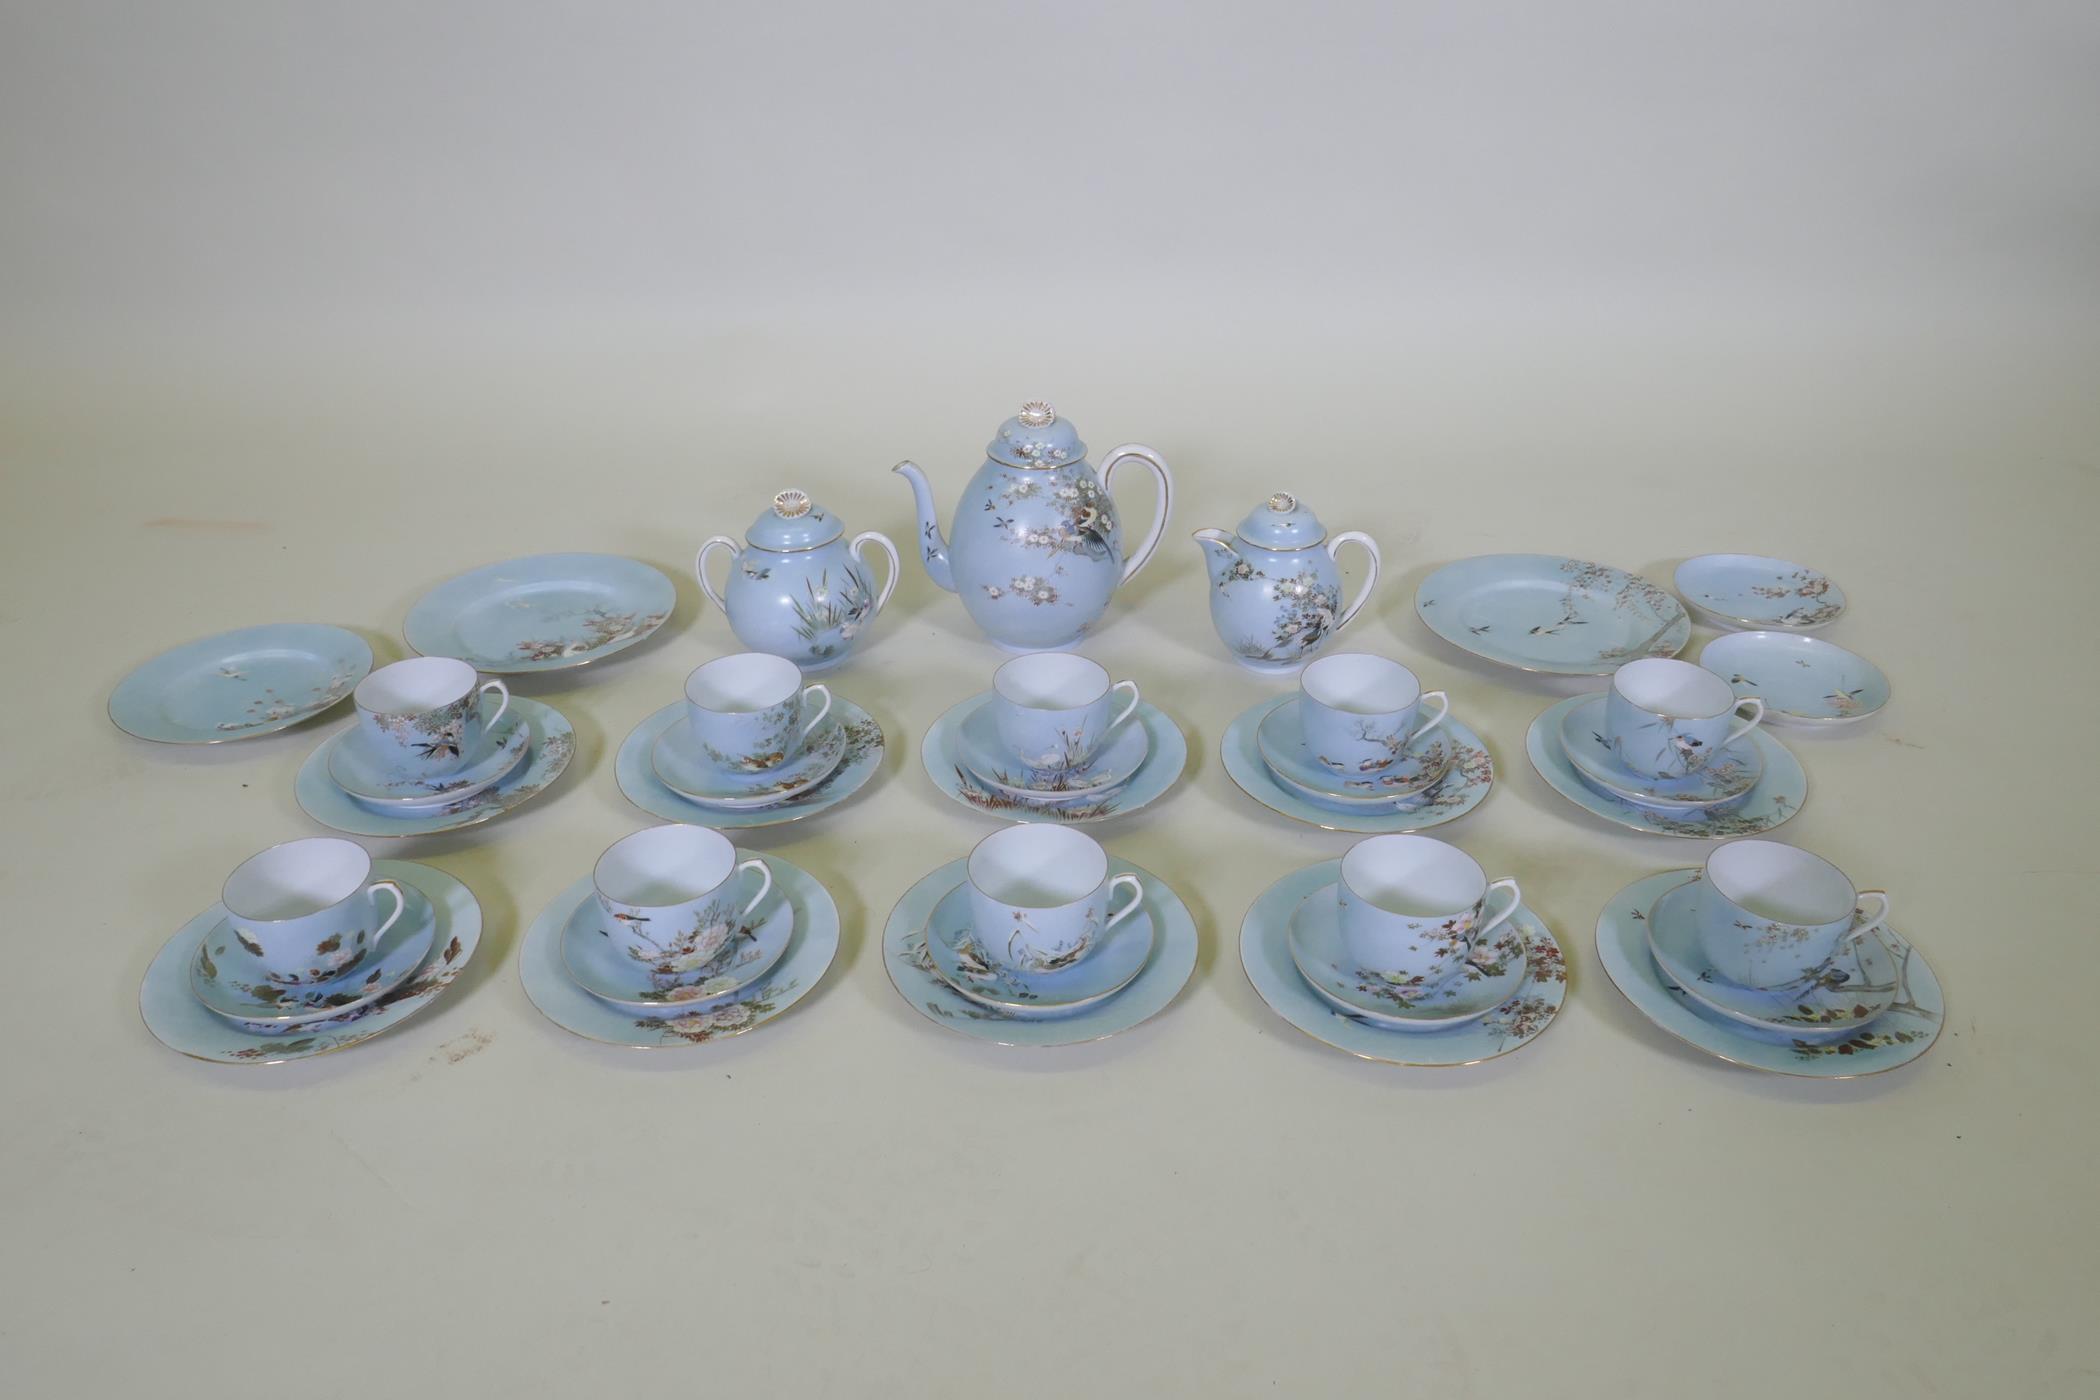 A Japanese Meiji period hand painted eggshell porcelain part tea service, comprising a tea pot, milk